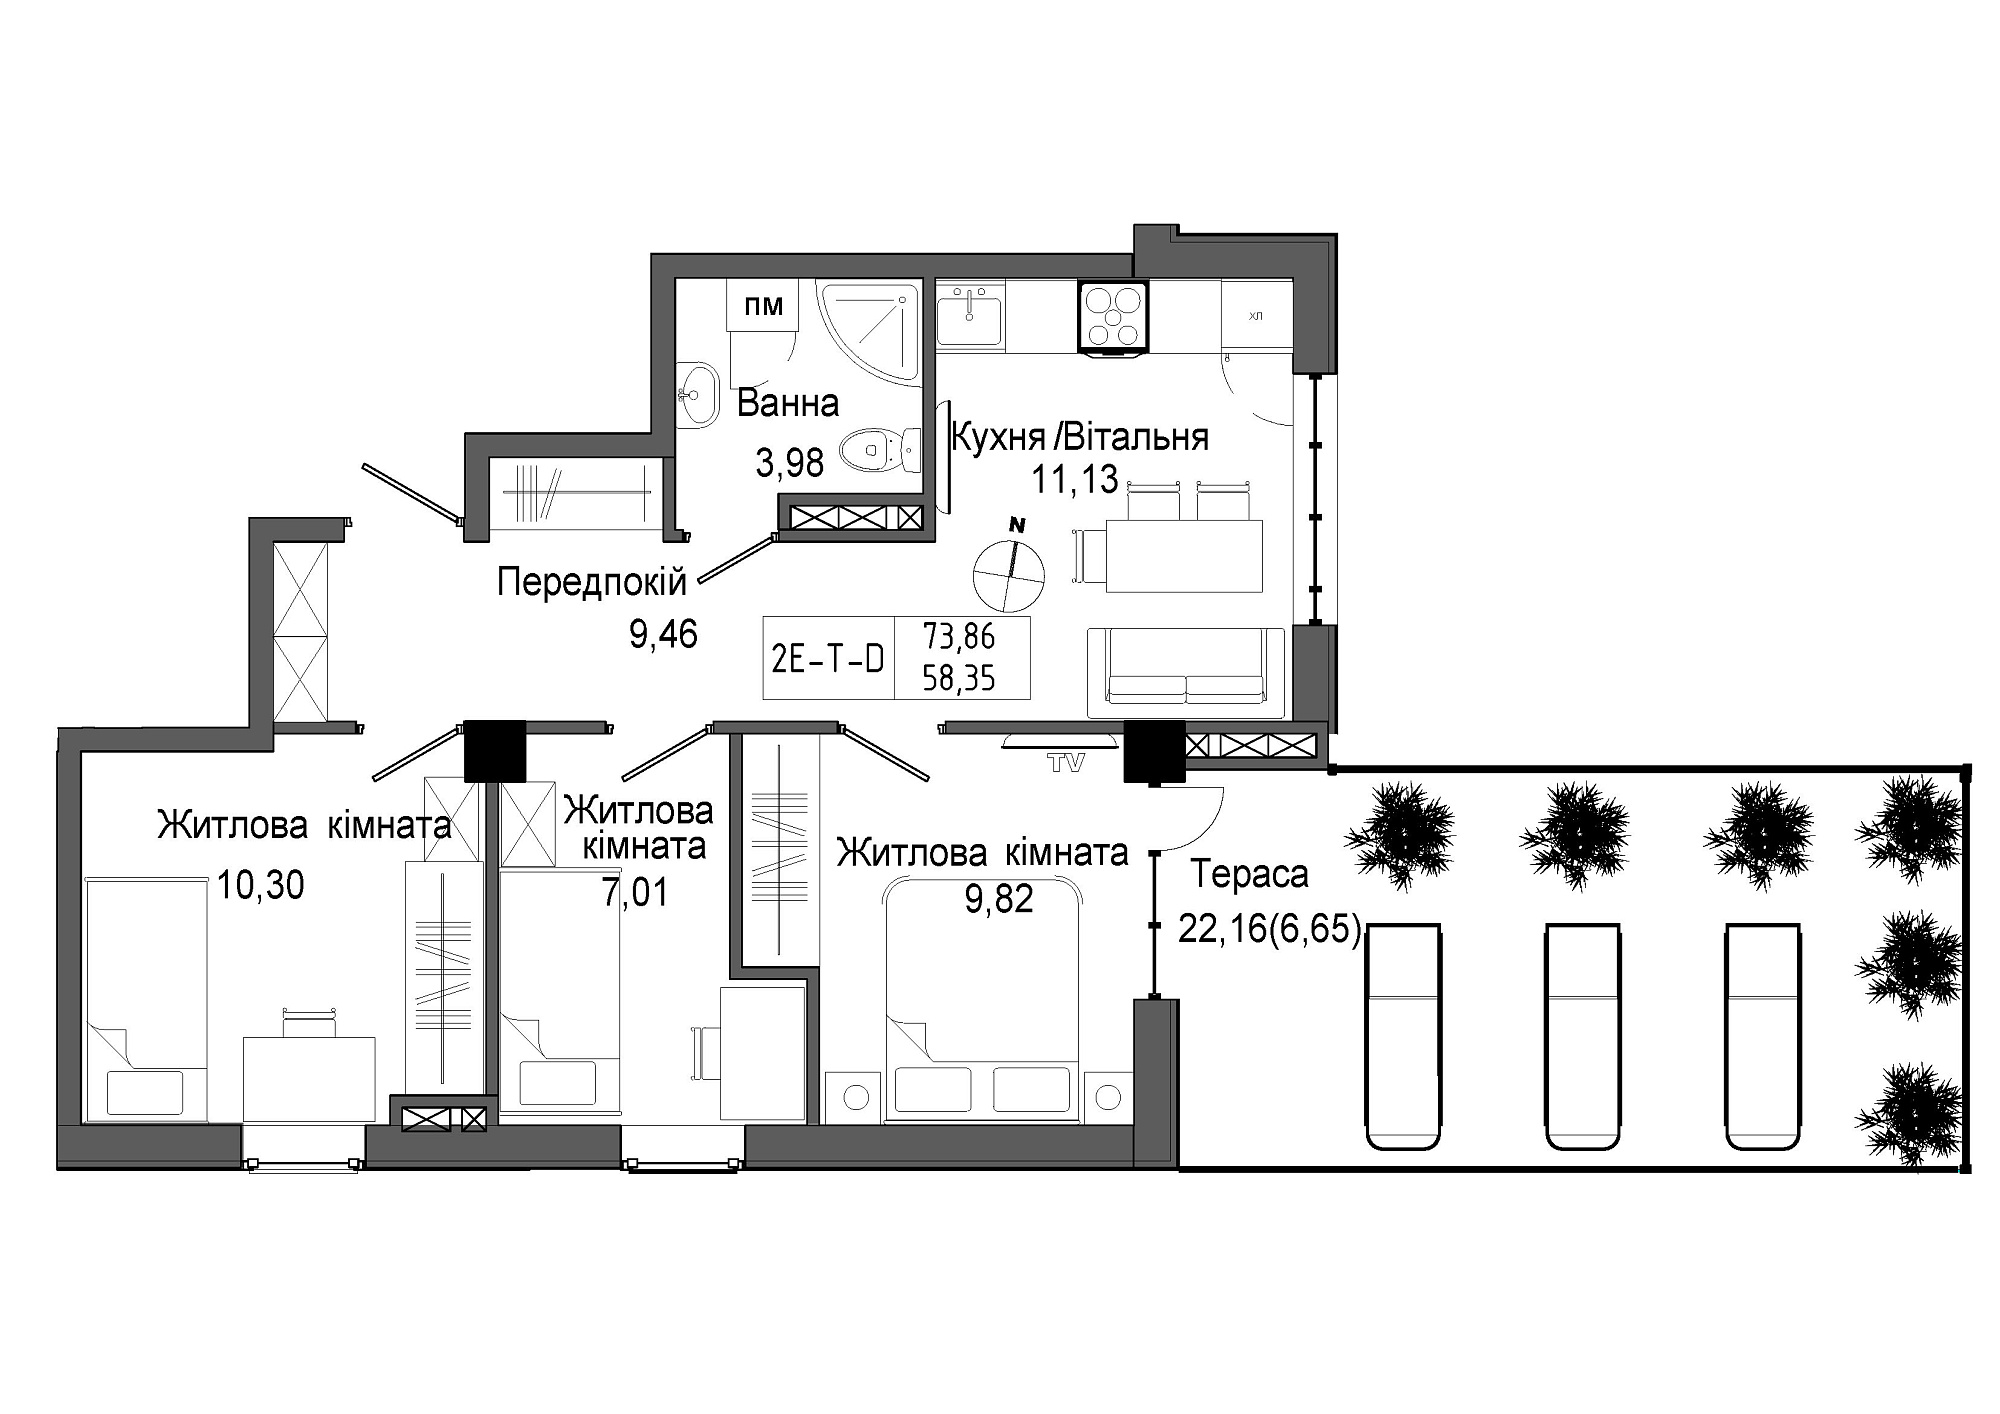 Планування 3-к квартира площею 58.35м2, UM-006-07/0006.